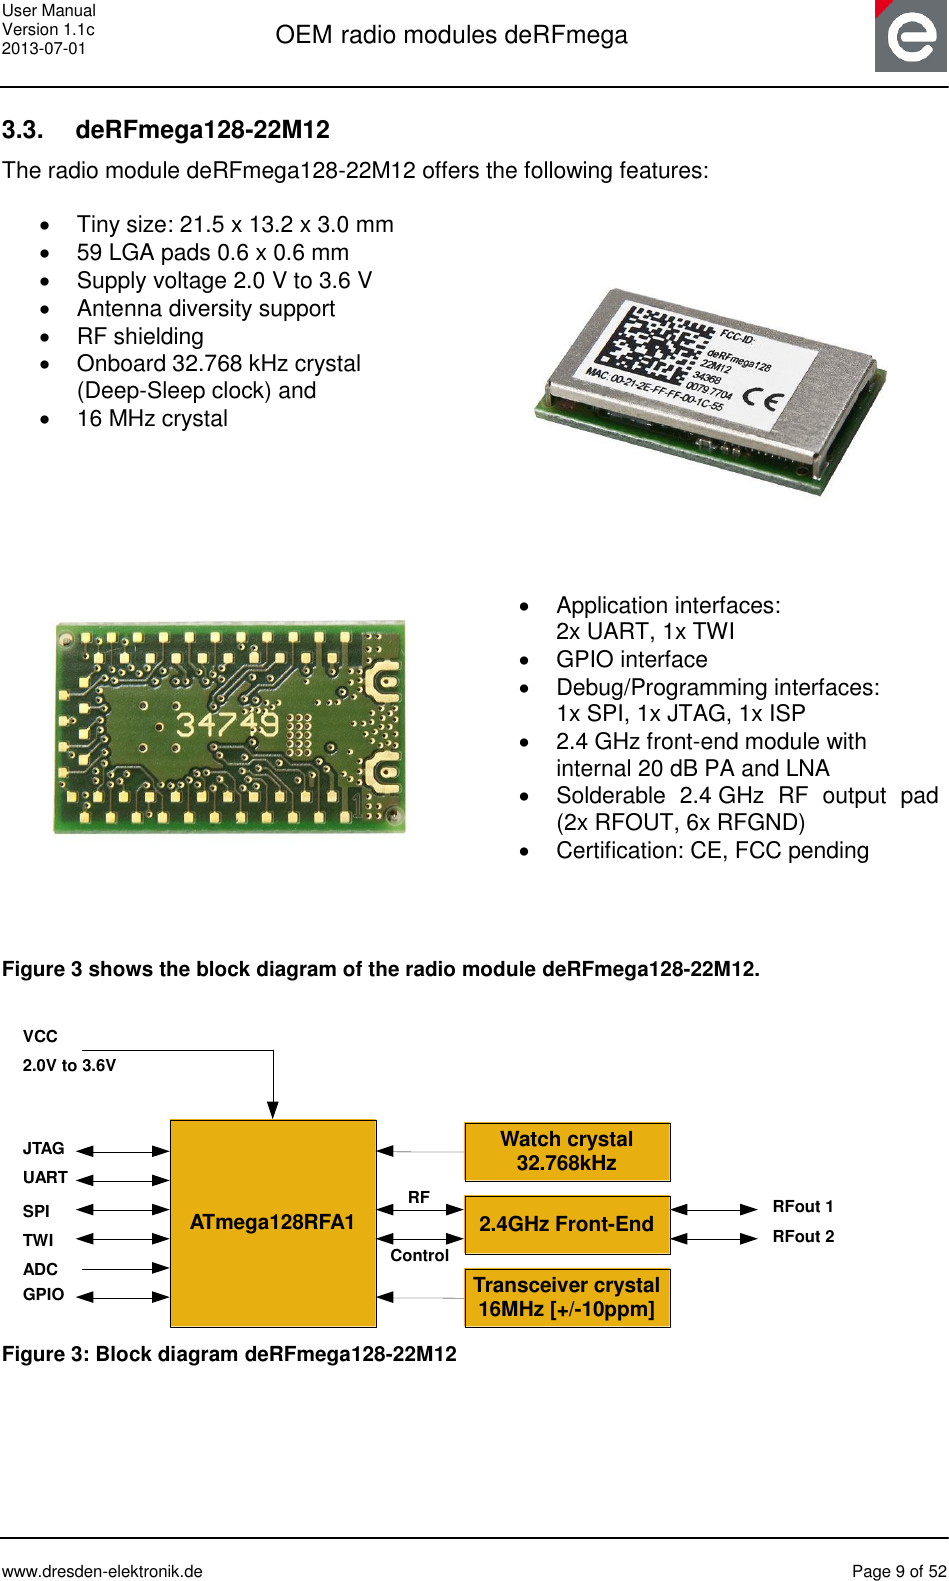 User Manual Version 1.1c 2013-07-01  OEM radio modules deRFmega      www.dresden-elektronik.de  Page 9 of 52  3.3.  deRFmega128-22M12 The radio module deRFmega128-22M12 offers the following features:    Tiny size: 21.5 x 13.2 x 3.0 mm  59 LGA pads 0.6 x 0.6 mm   Supply voltage 2.0 V to 3.6 V   Antenna diversity support   RF shielding   Onboard 32.768 kHz crystal  (Deep-Sleep clock) and   16 MHz crystal      Application interfaces:  2x UART, 1x TWI   GPIO interface   Debug/Programming interfaces:  1x SPI, 1x JTAG, 1x ISP   2.4 GHz front-end module with  internal 20 dB PA and LNA   Solderable  2.4 GHz  RF  output  pad (2x RFOUT, 6x RFGND)  Certification: CE, FCC pending   Figure 3 shows the block diagram of the radio module deRFmega128-22M12.   ATmega128RFA1Transceiver crystal16MHz [+/-10ppm]JTAGUARTVCC2.0V to 3.6VWatch crystal32.768kHzSPITWIADCGPIO2.4GHz Front-End RFout 1RFout 2RFControl Figure 3: Block diagram deRFmega128-22M12  